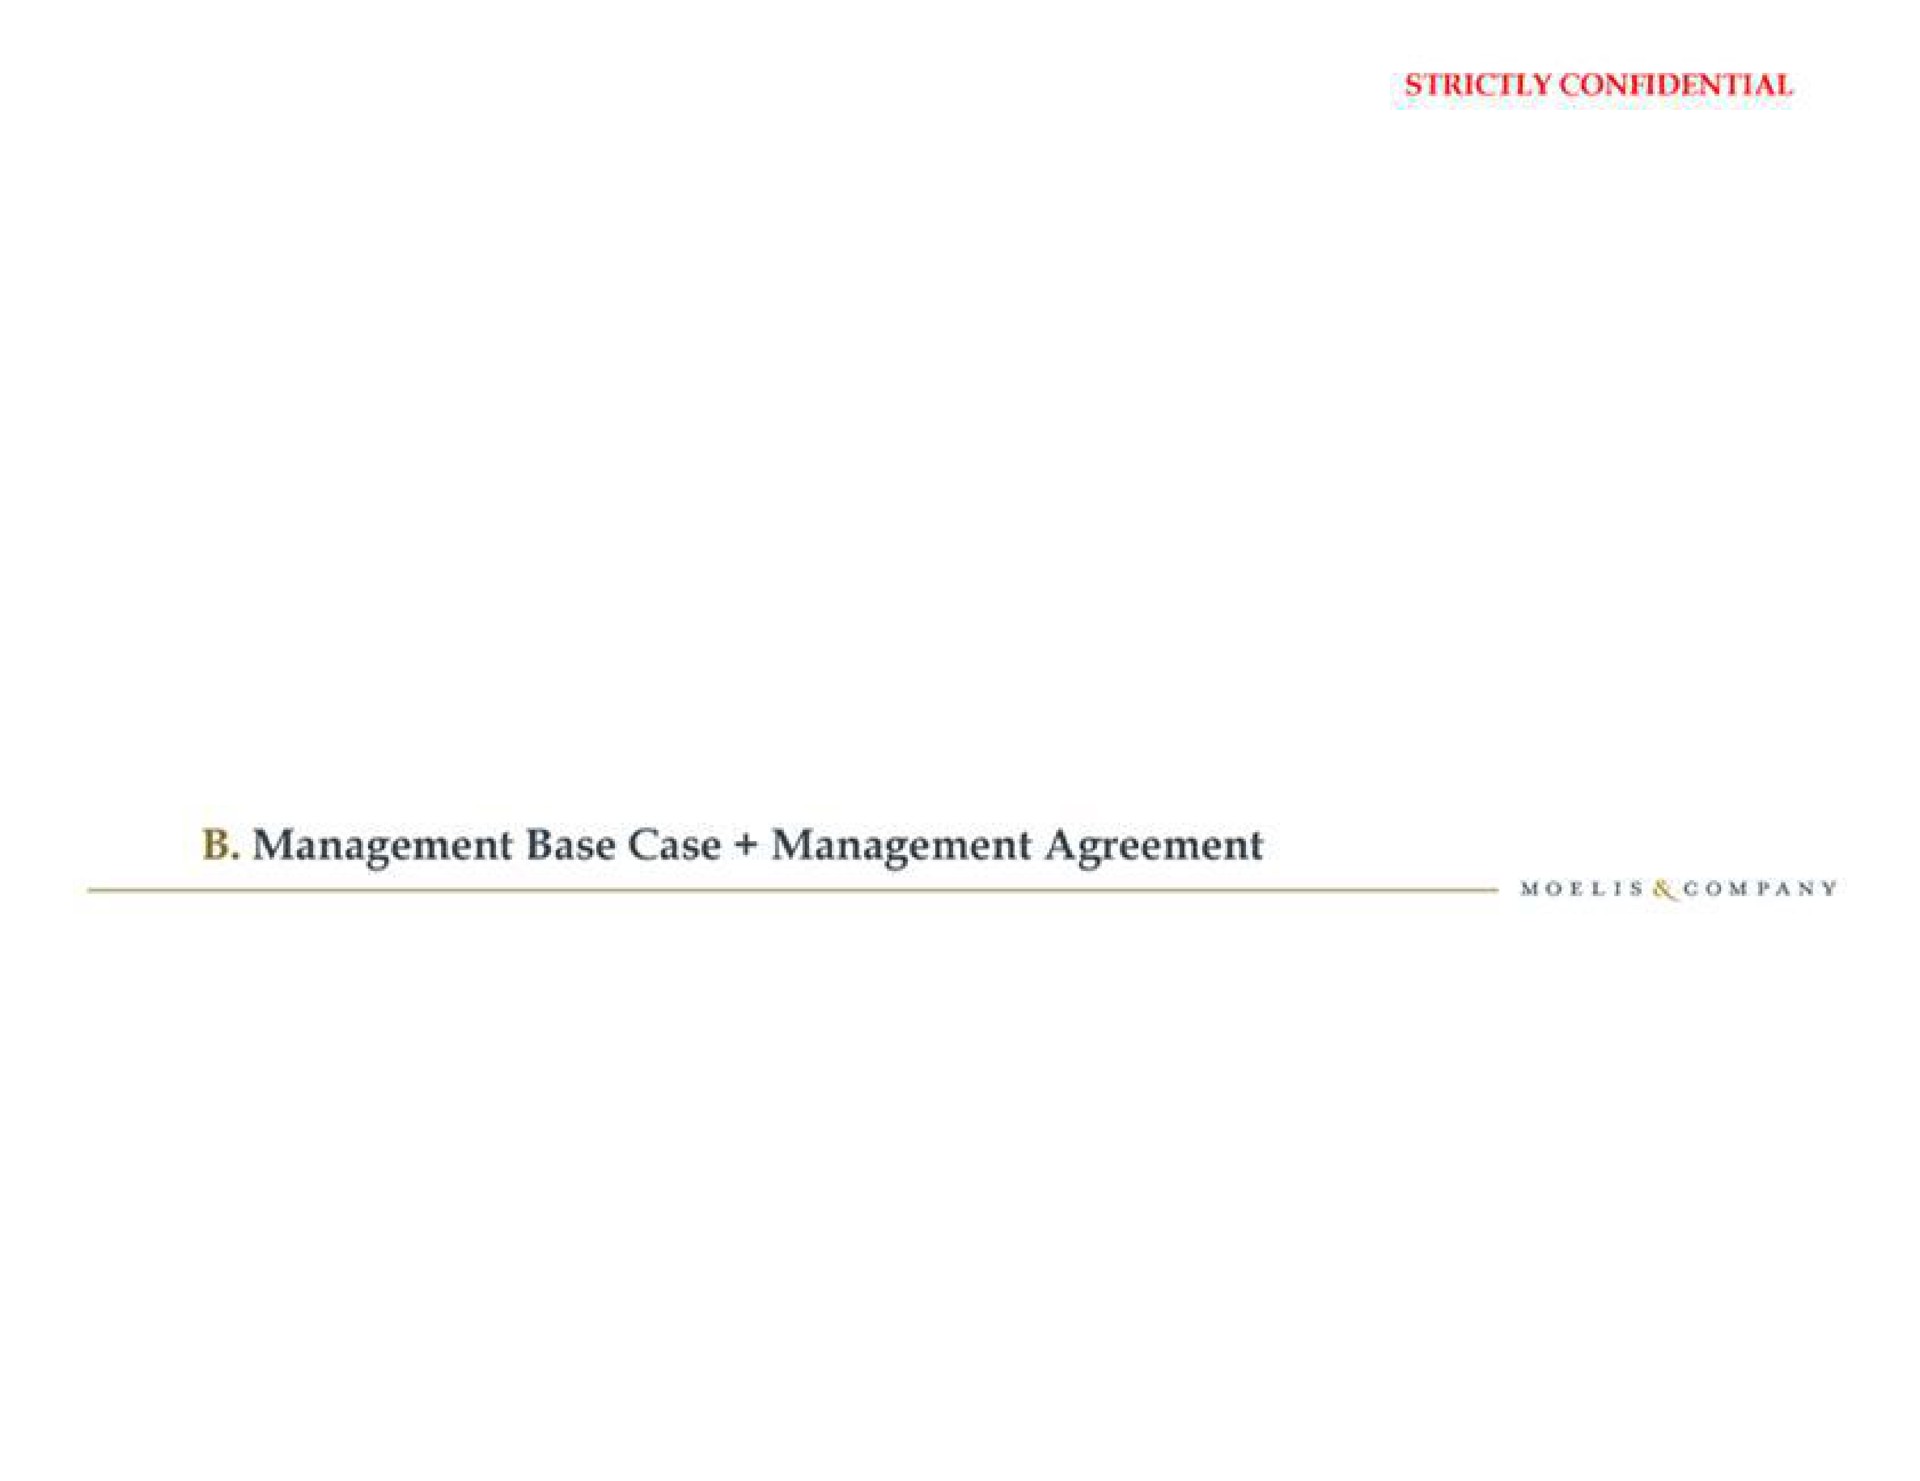 management base case management agreement | Moelis & Company